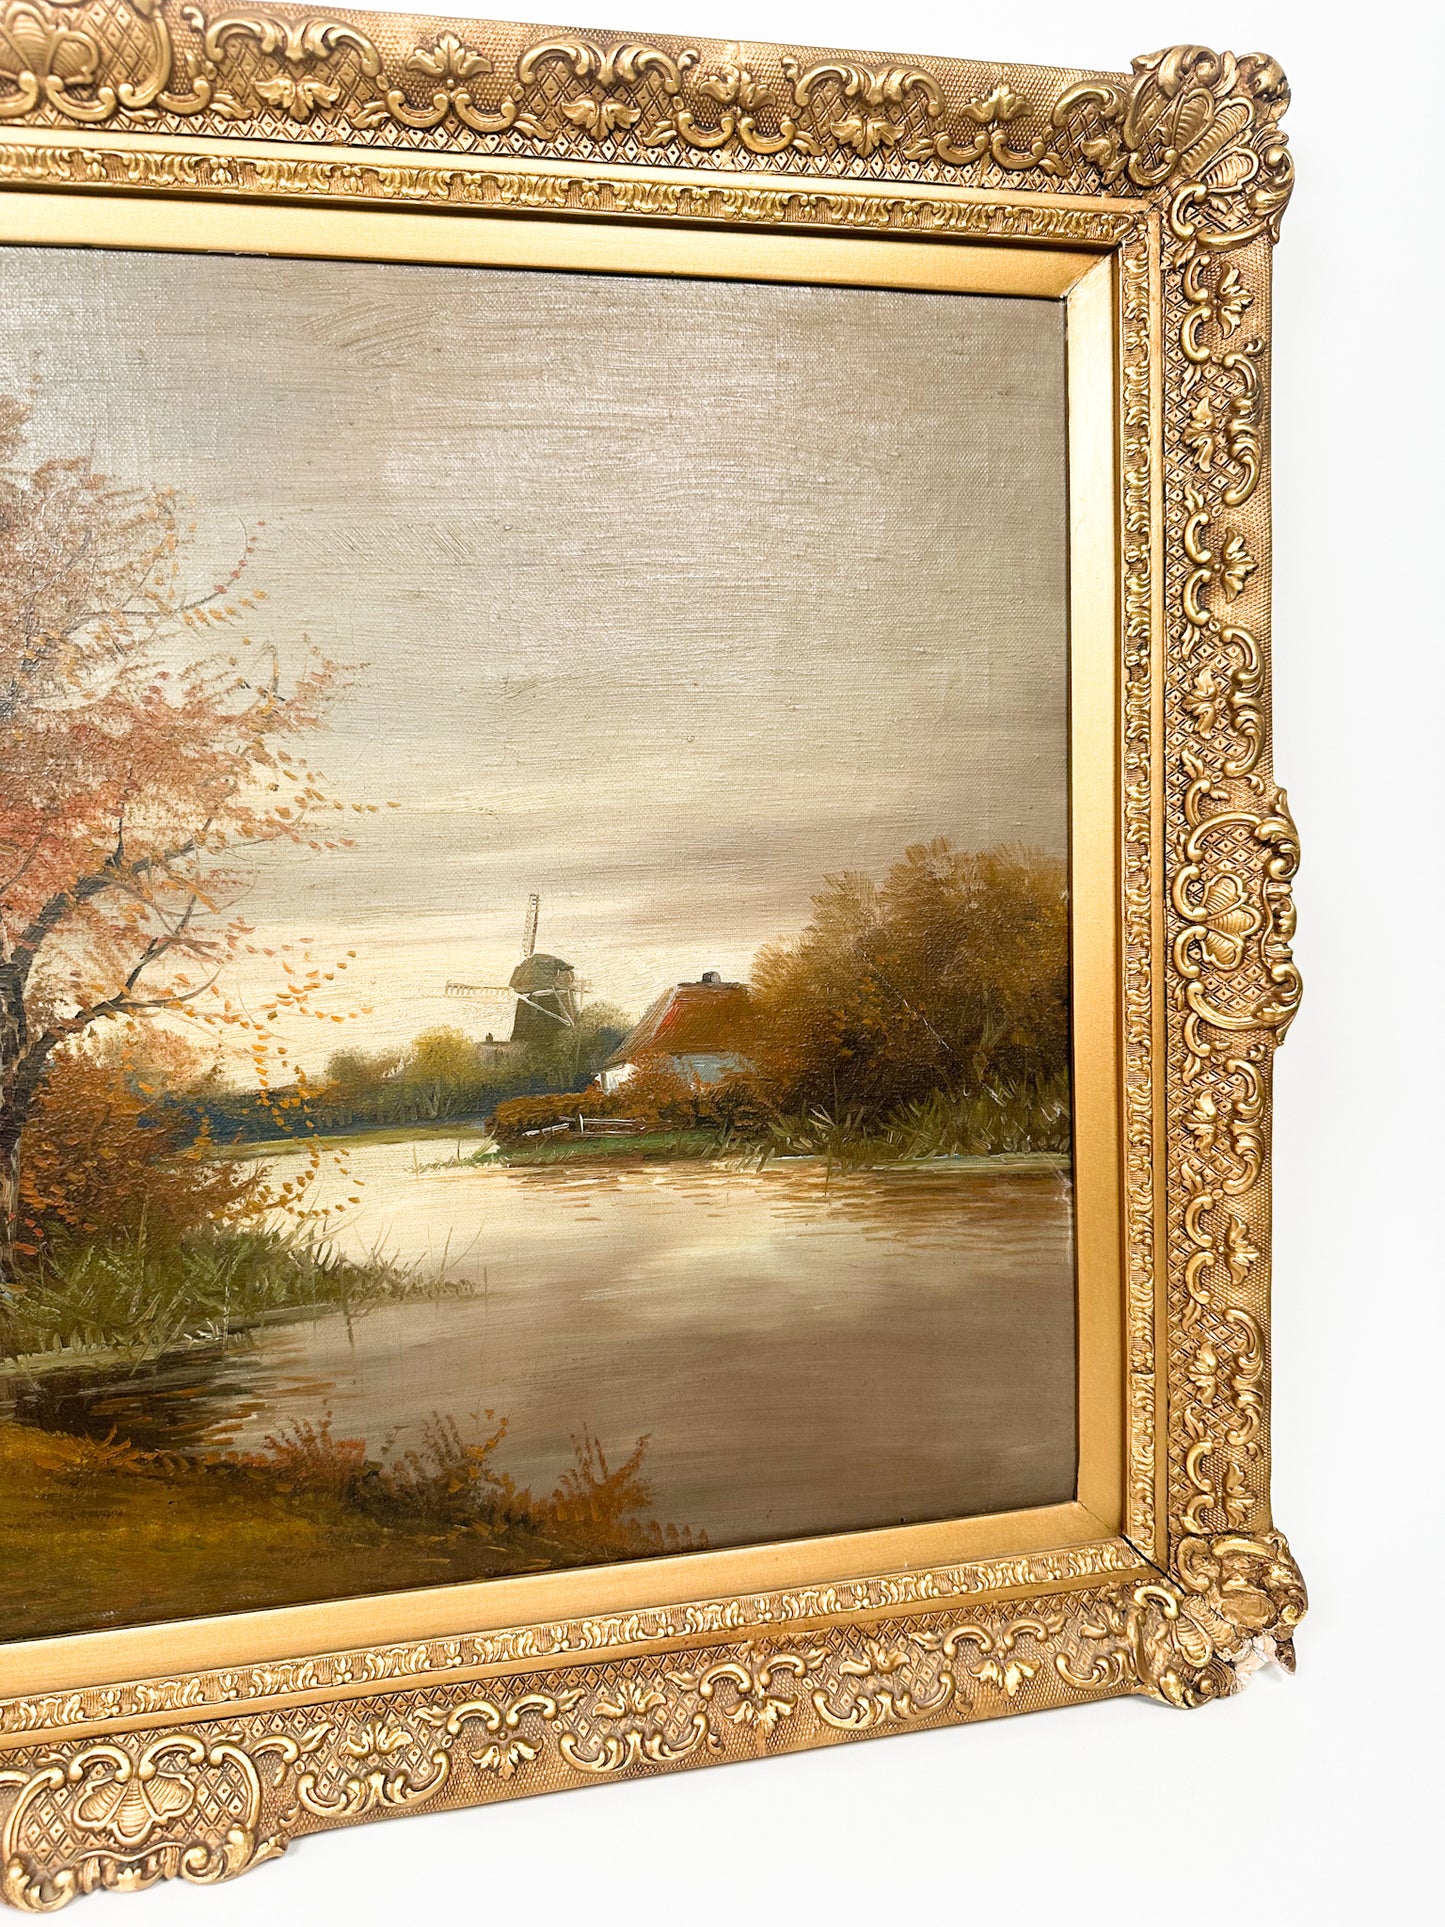 Original Signed Oil Landscape Painting